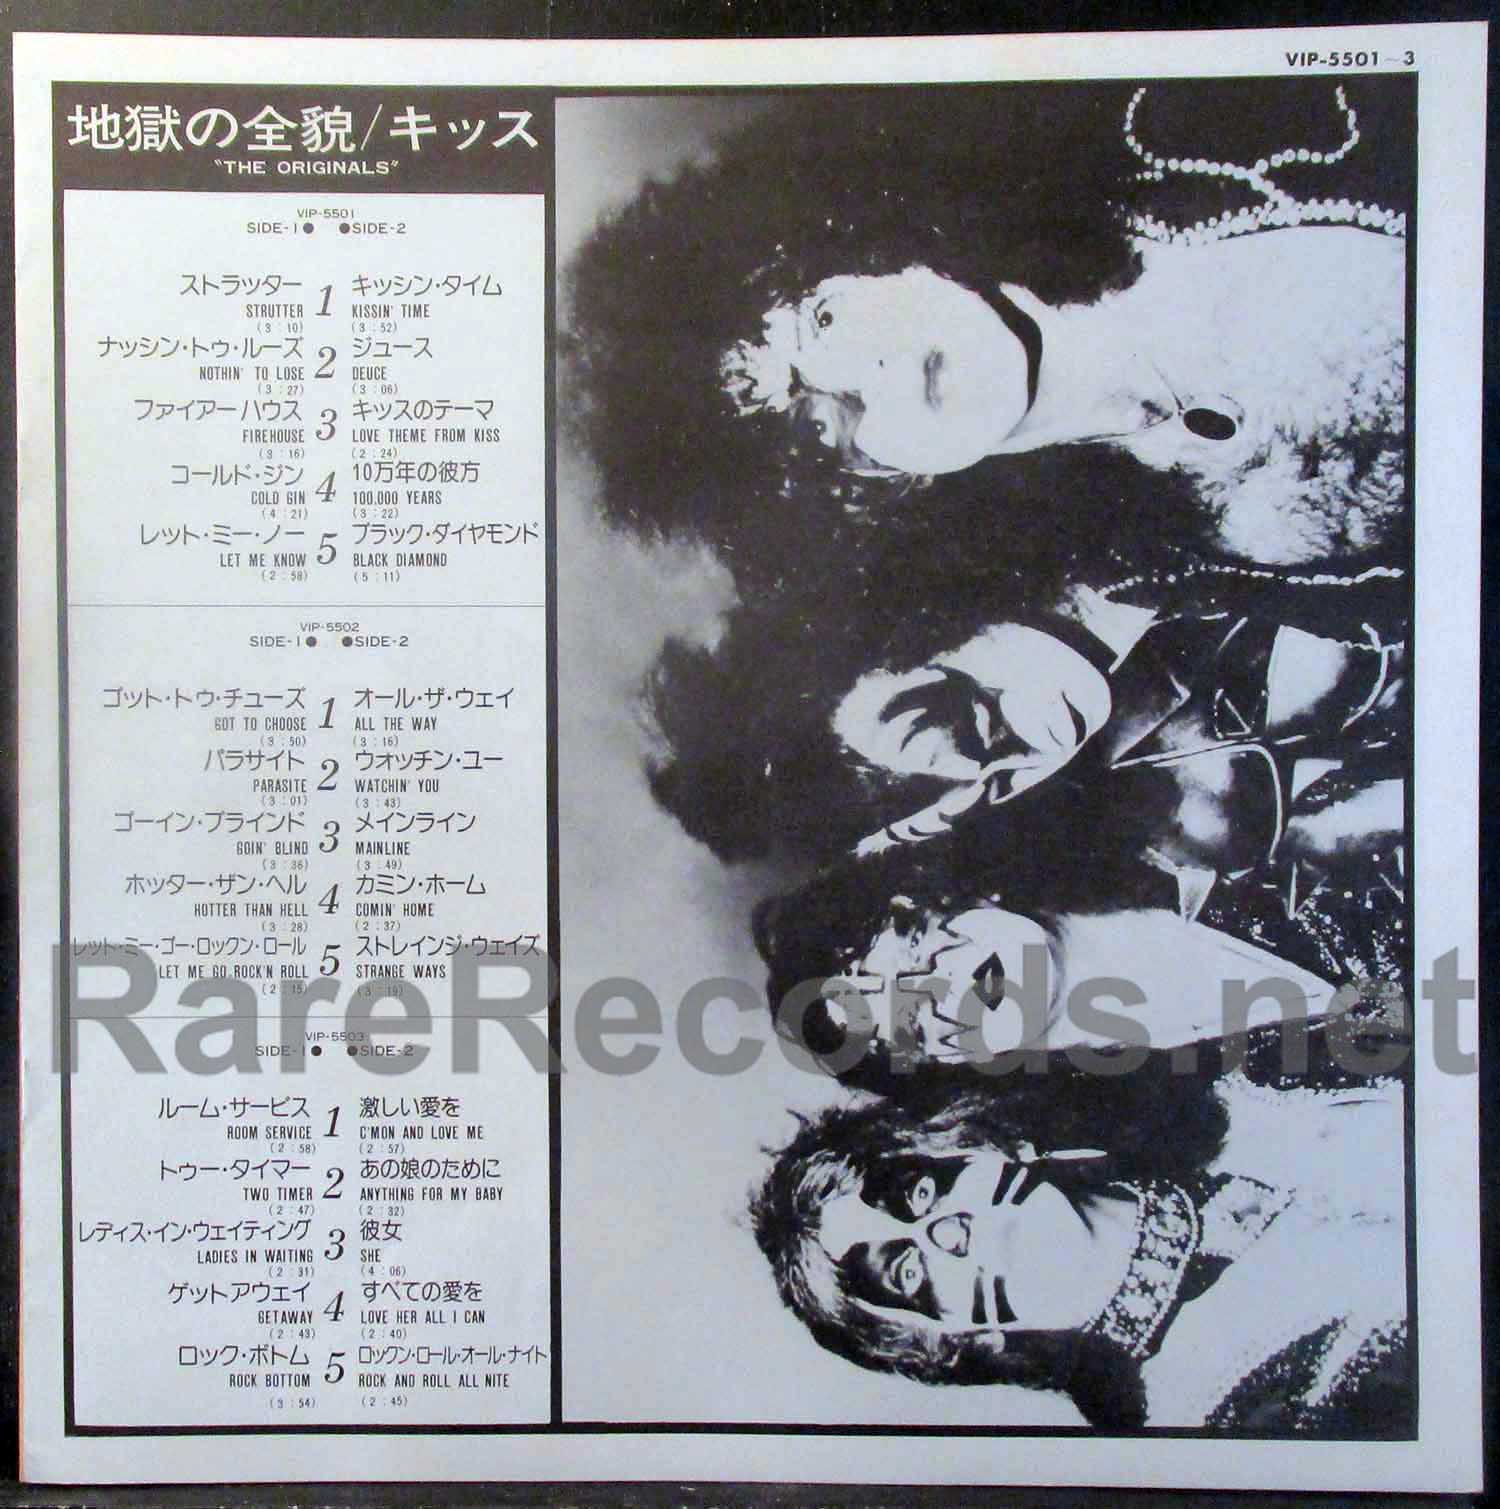 Kiss - The Originals complete original 1977 Japan 3 LP set with obi